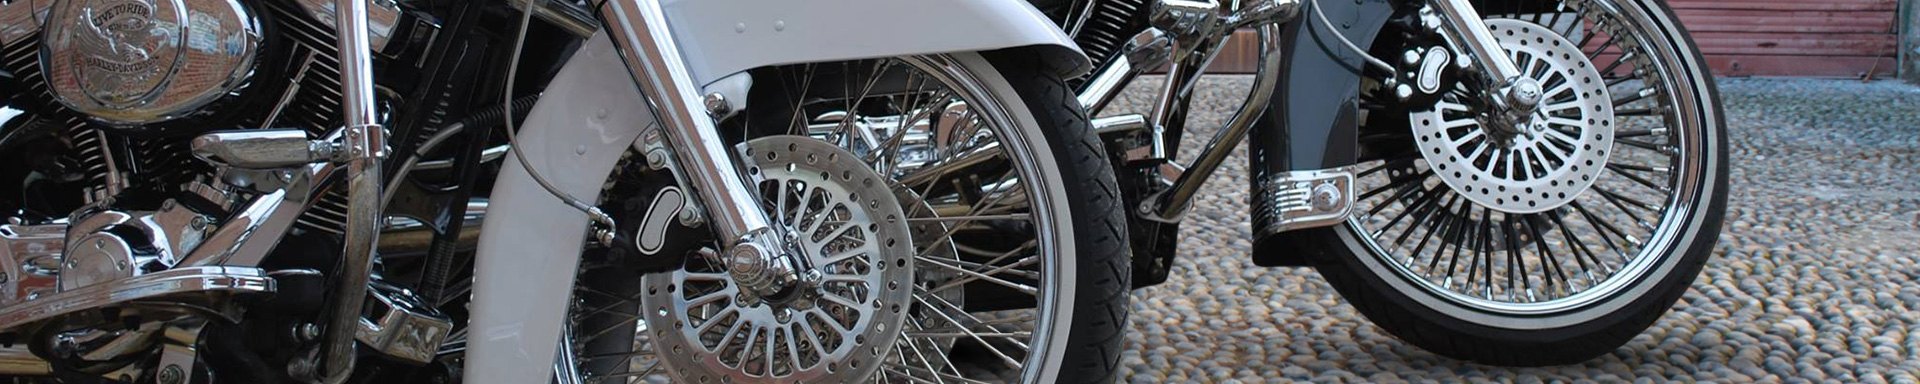 Ride Wright Wheels Motorcycle Wheels